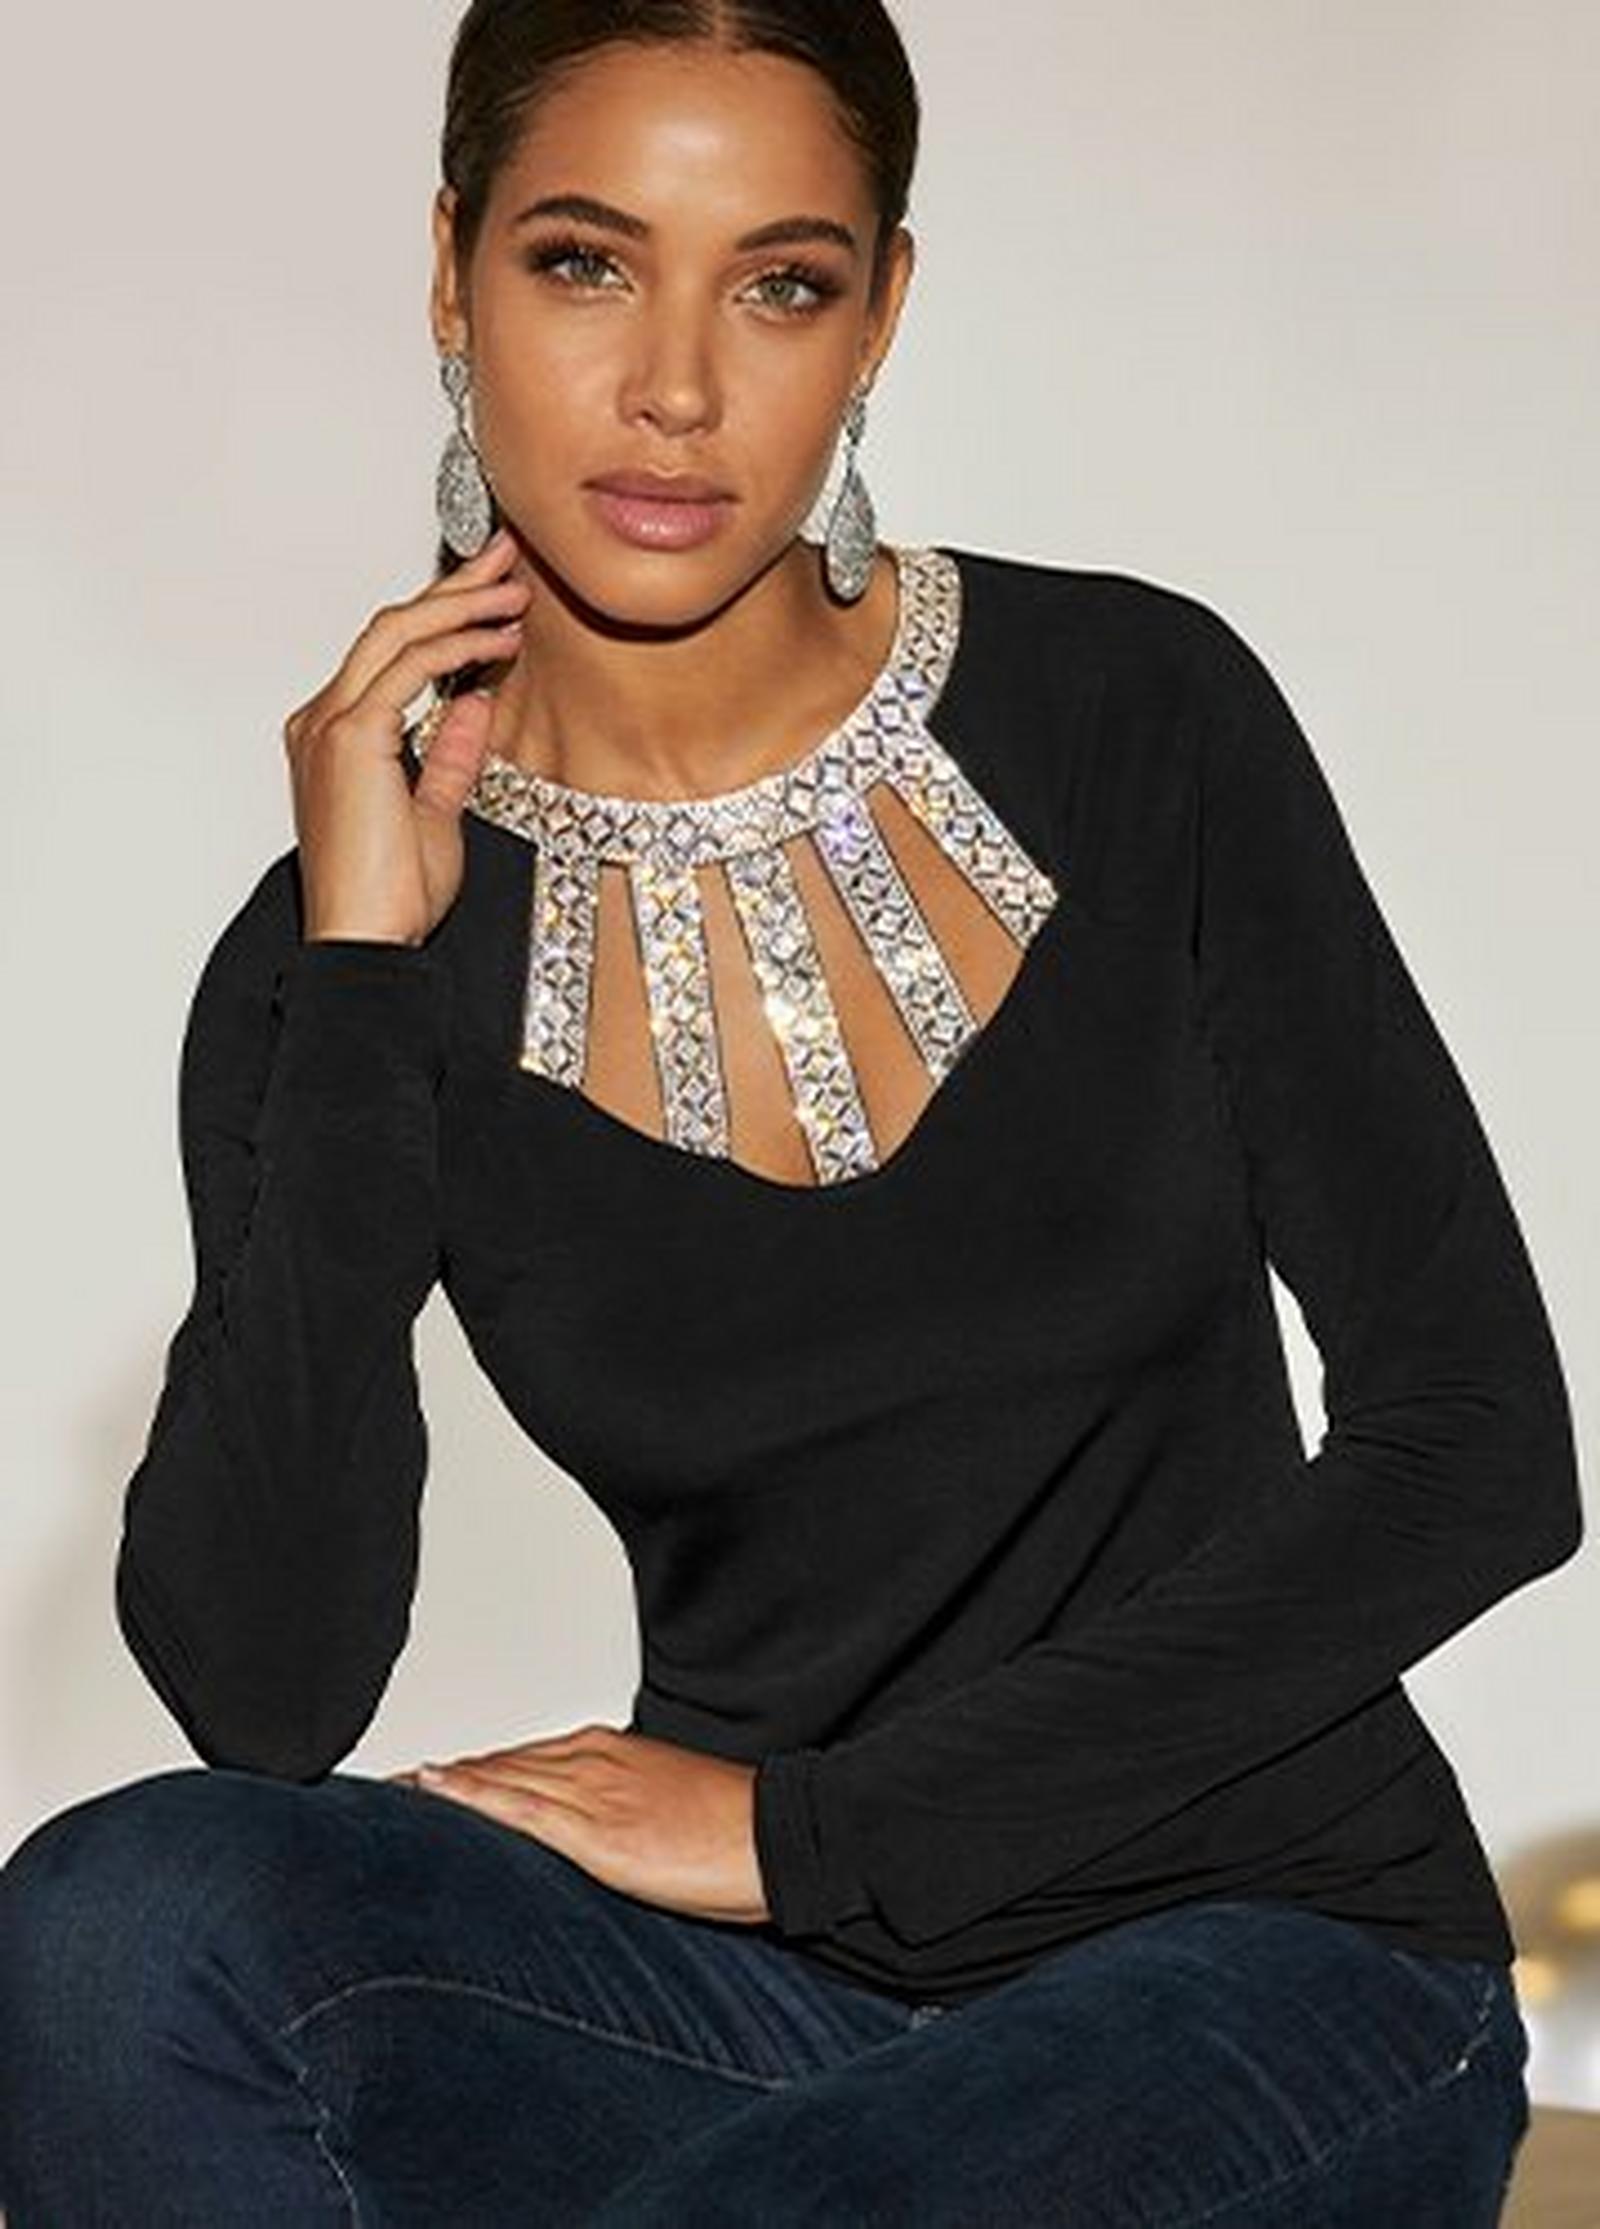 model wearing a black long-sleeve rhinestone embellished top.